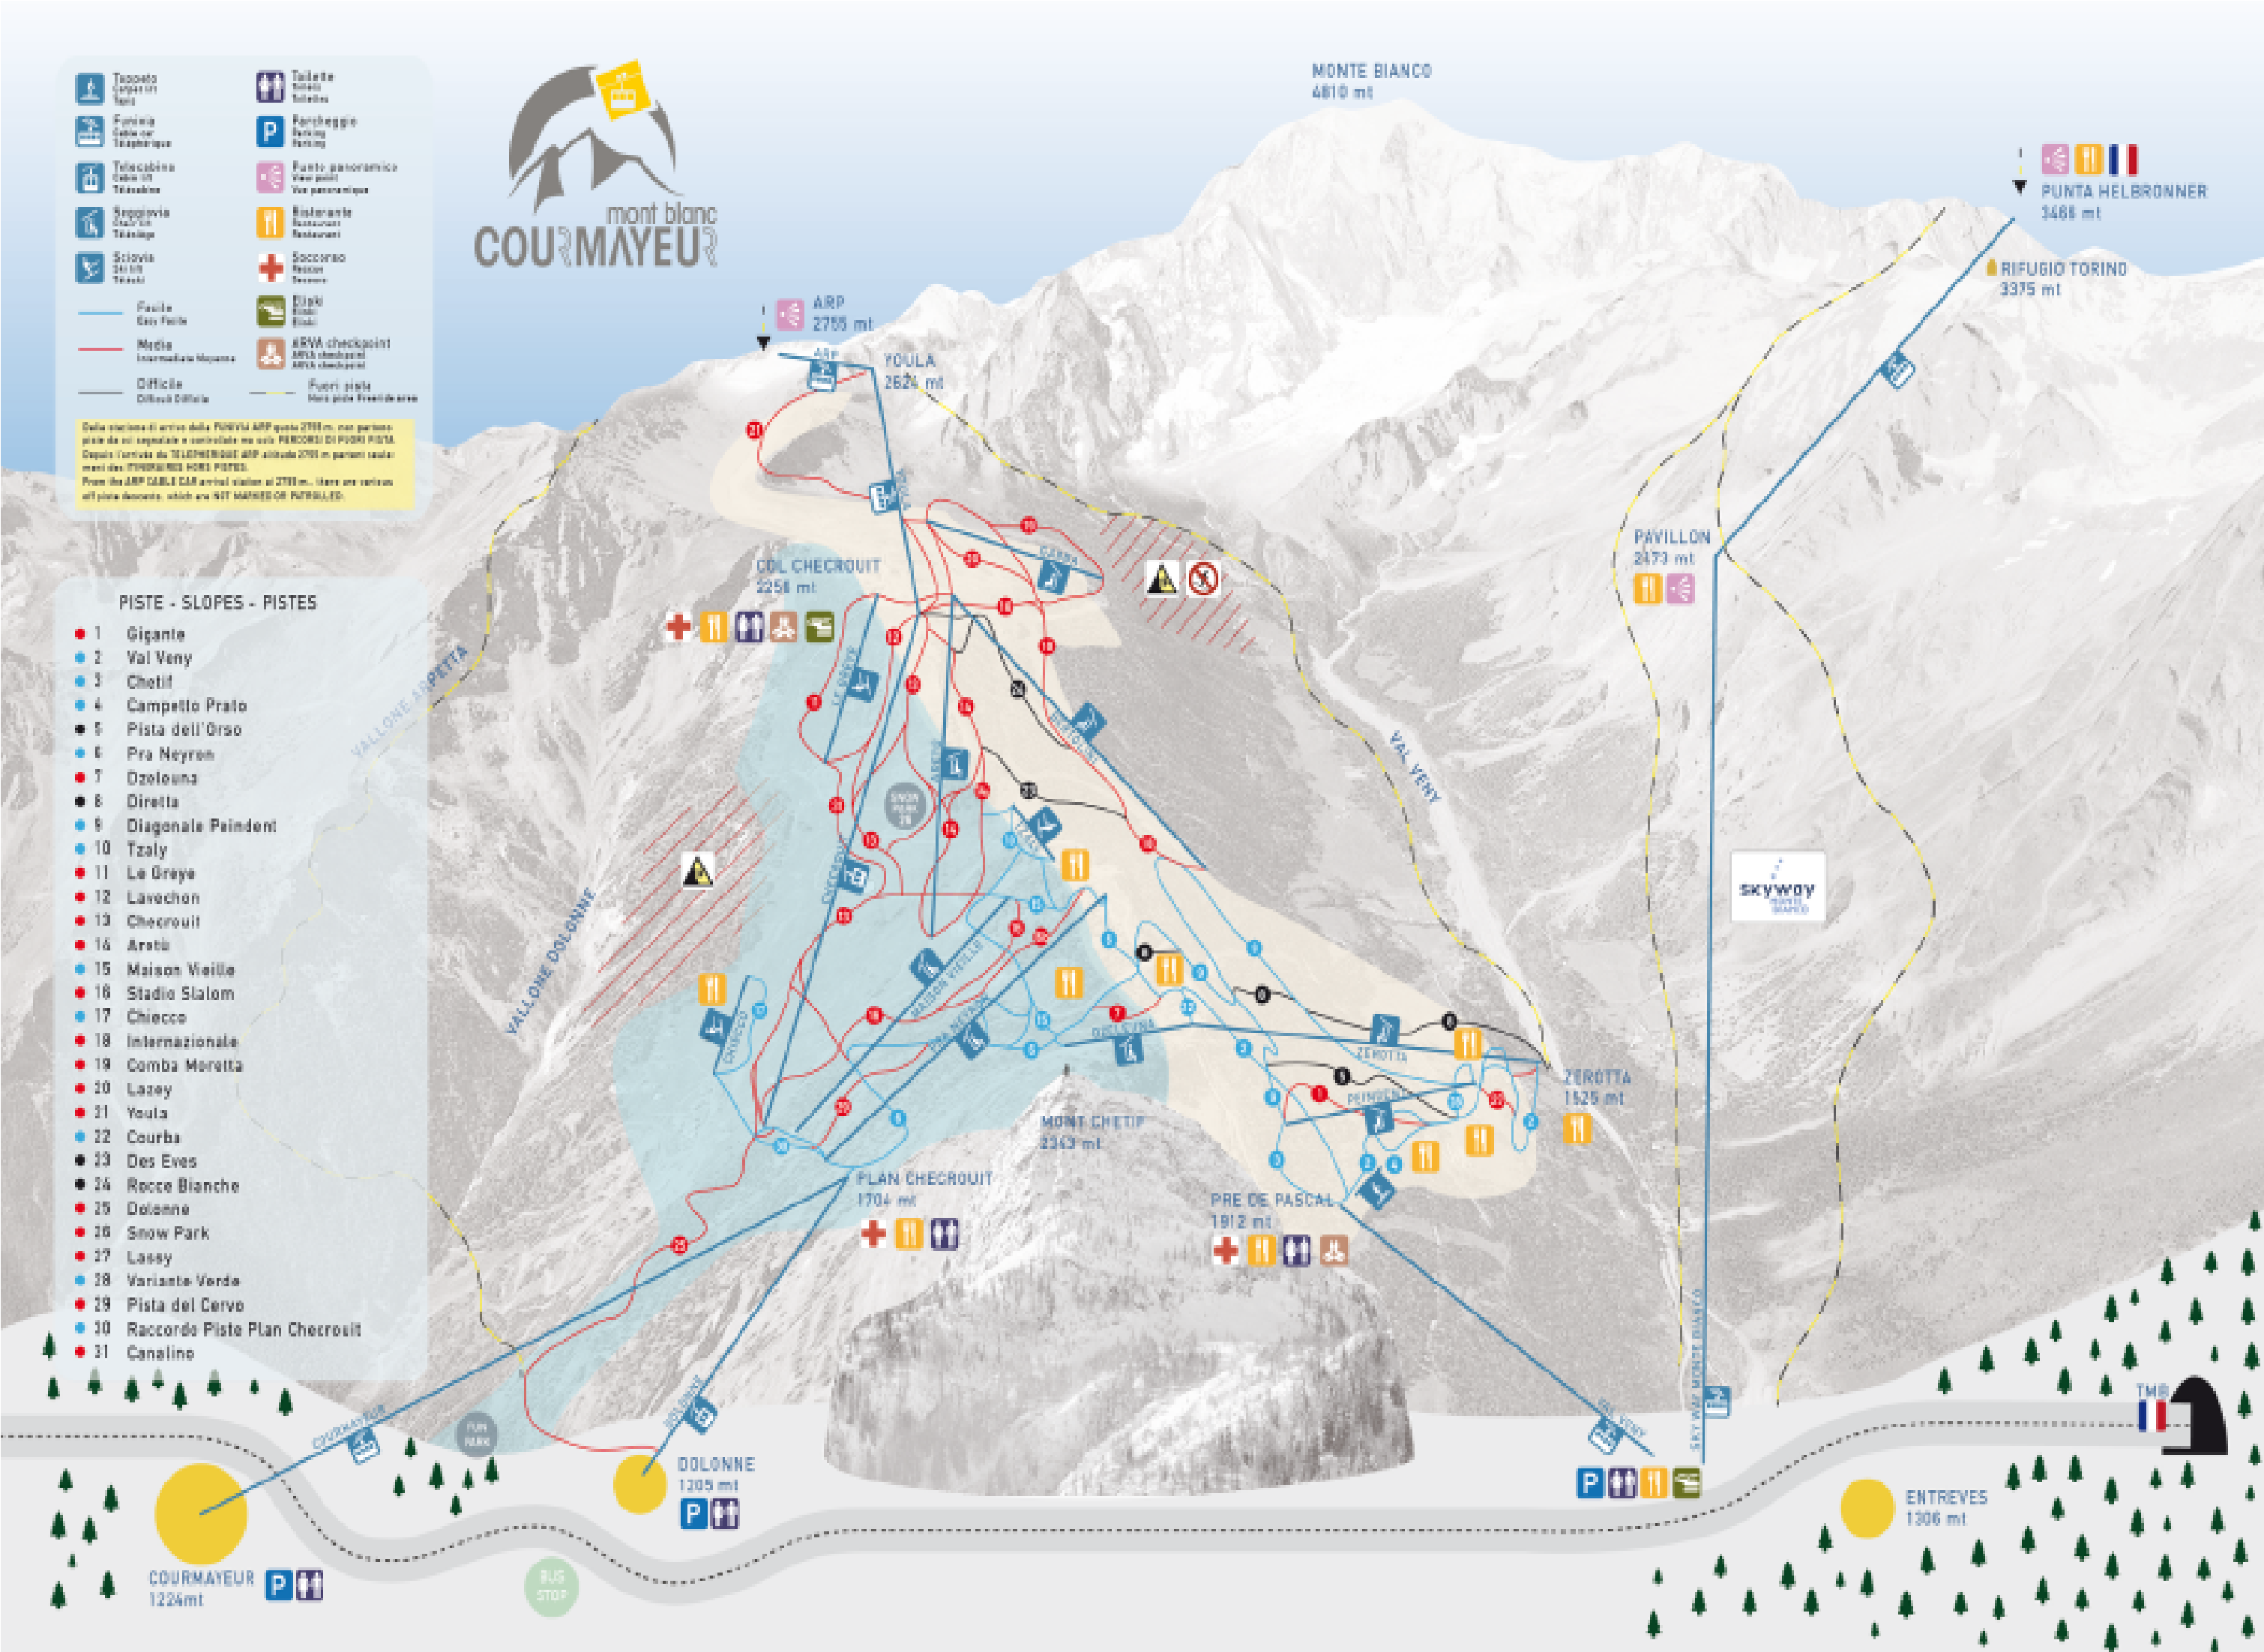 Courmayeur Mont Blac mapa de pistas